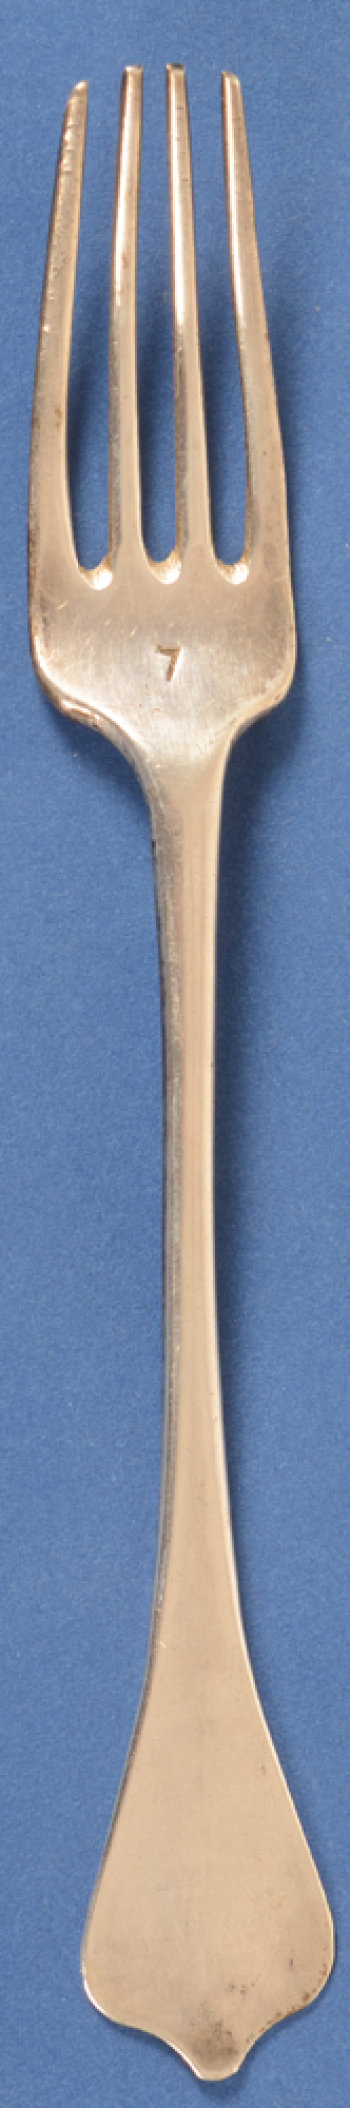 Mechelen silver fork 1727